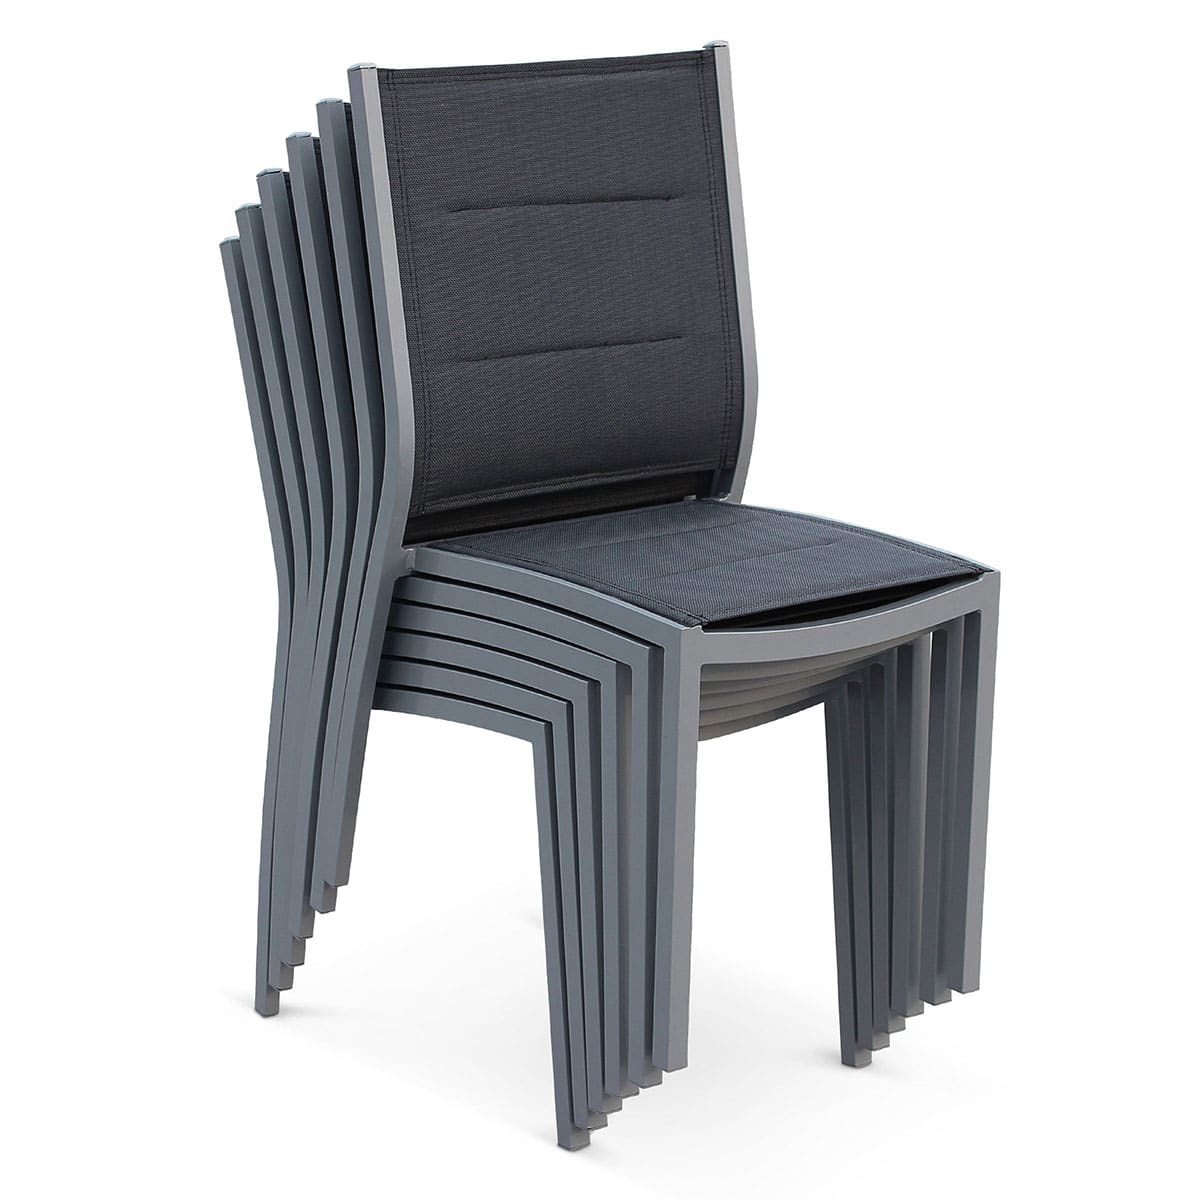 CHICAGO aluminium chairs